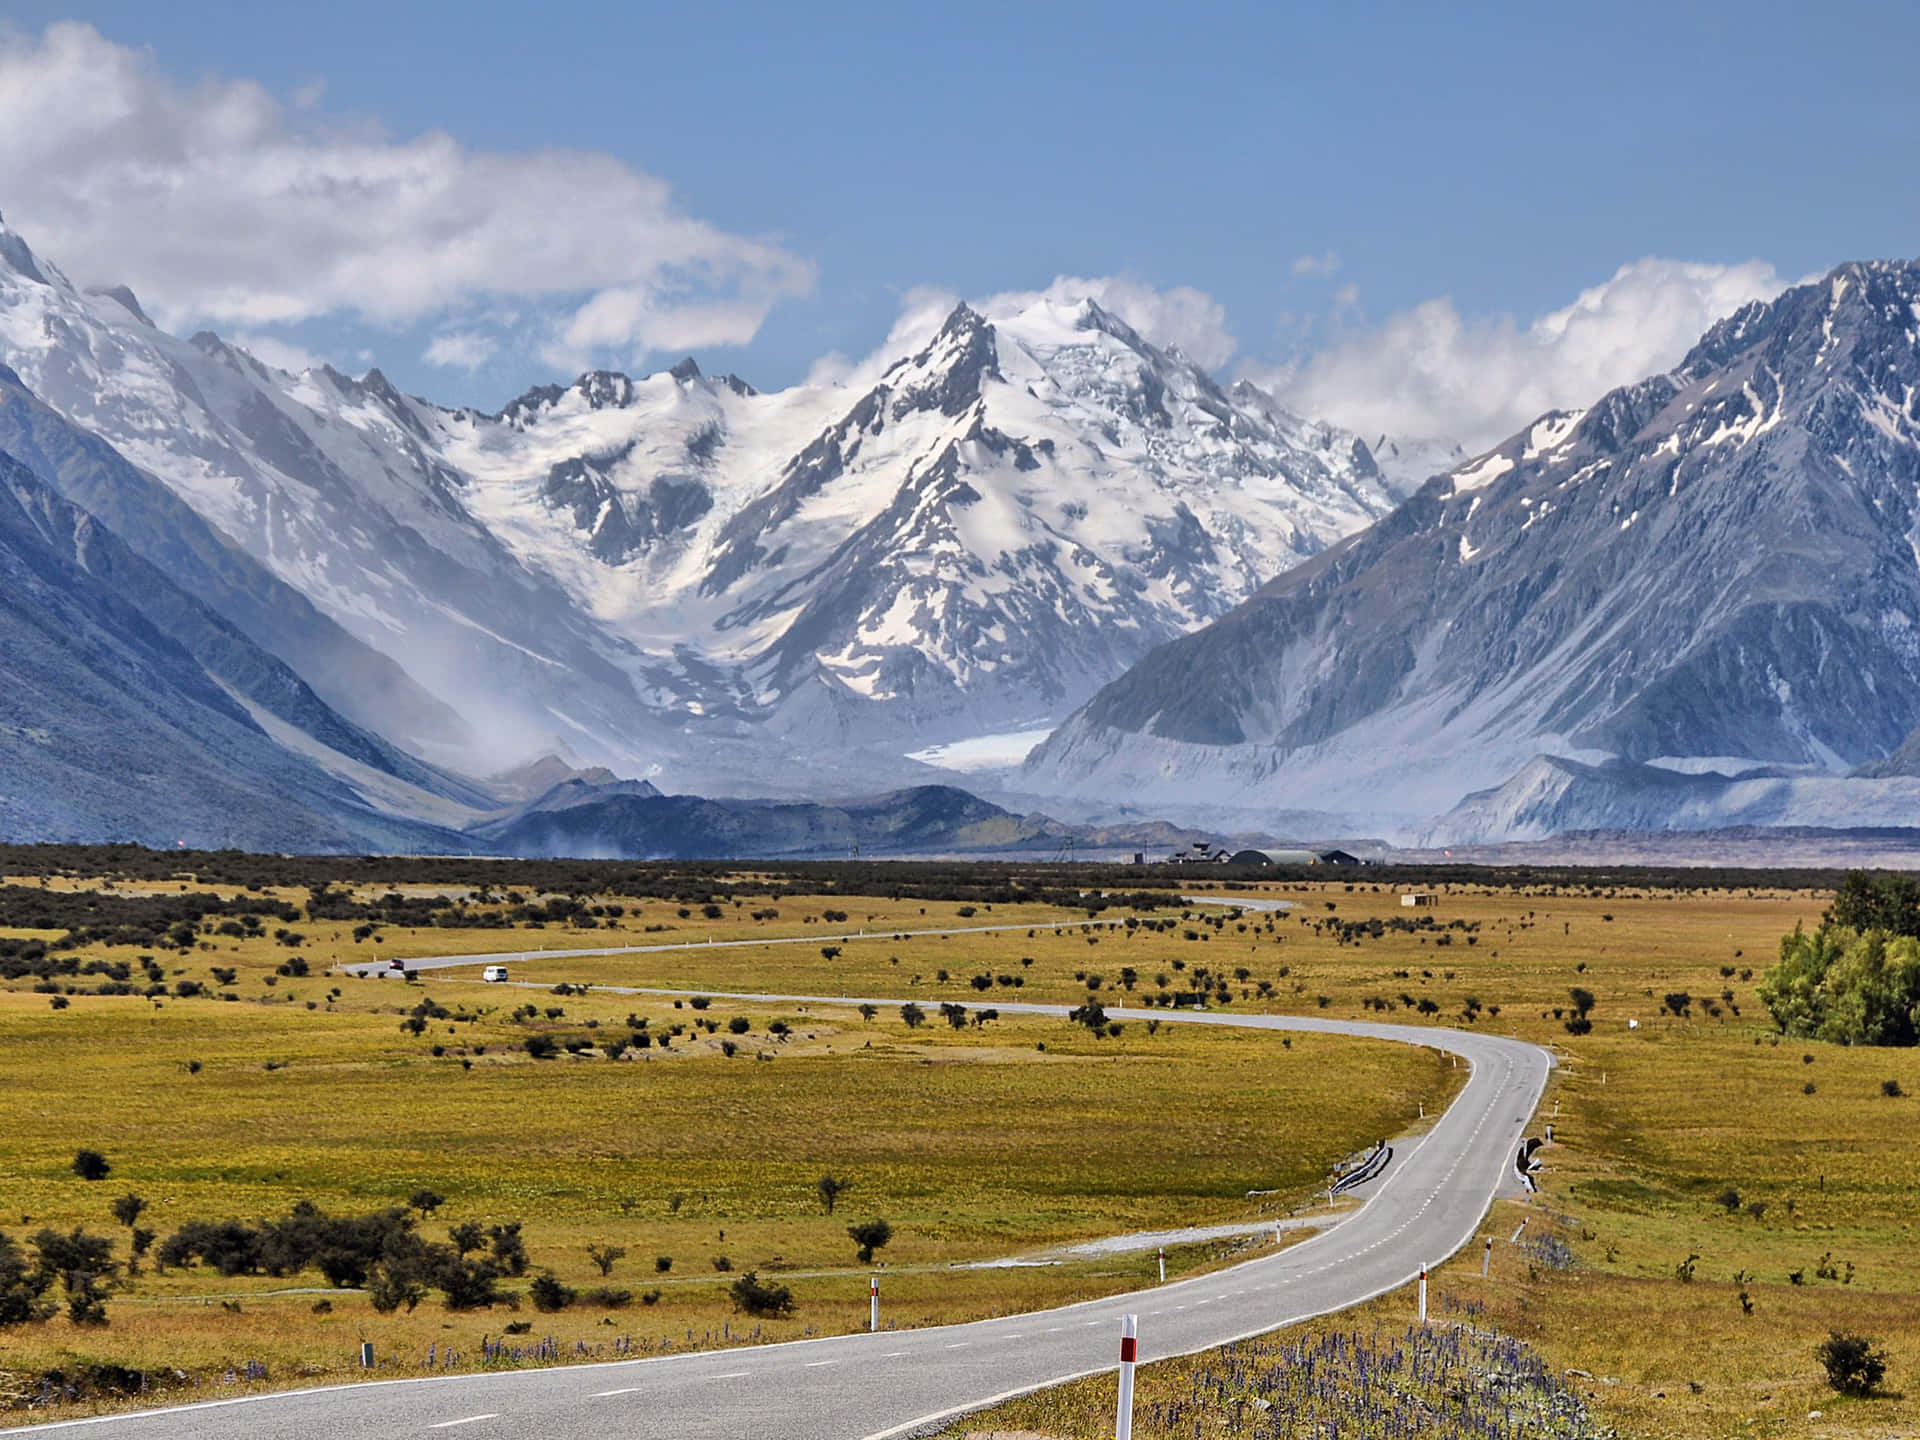 New Zealand's stunning landscape